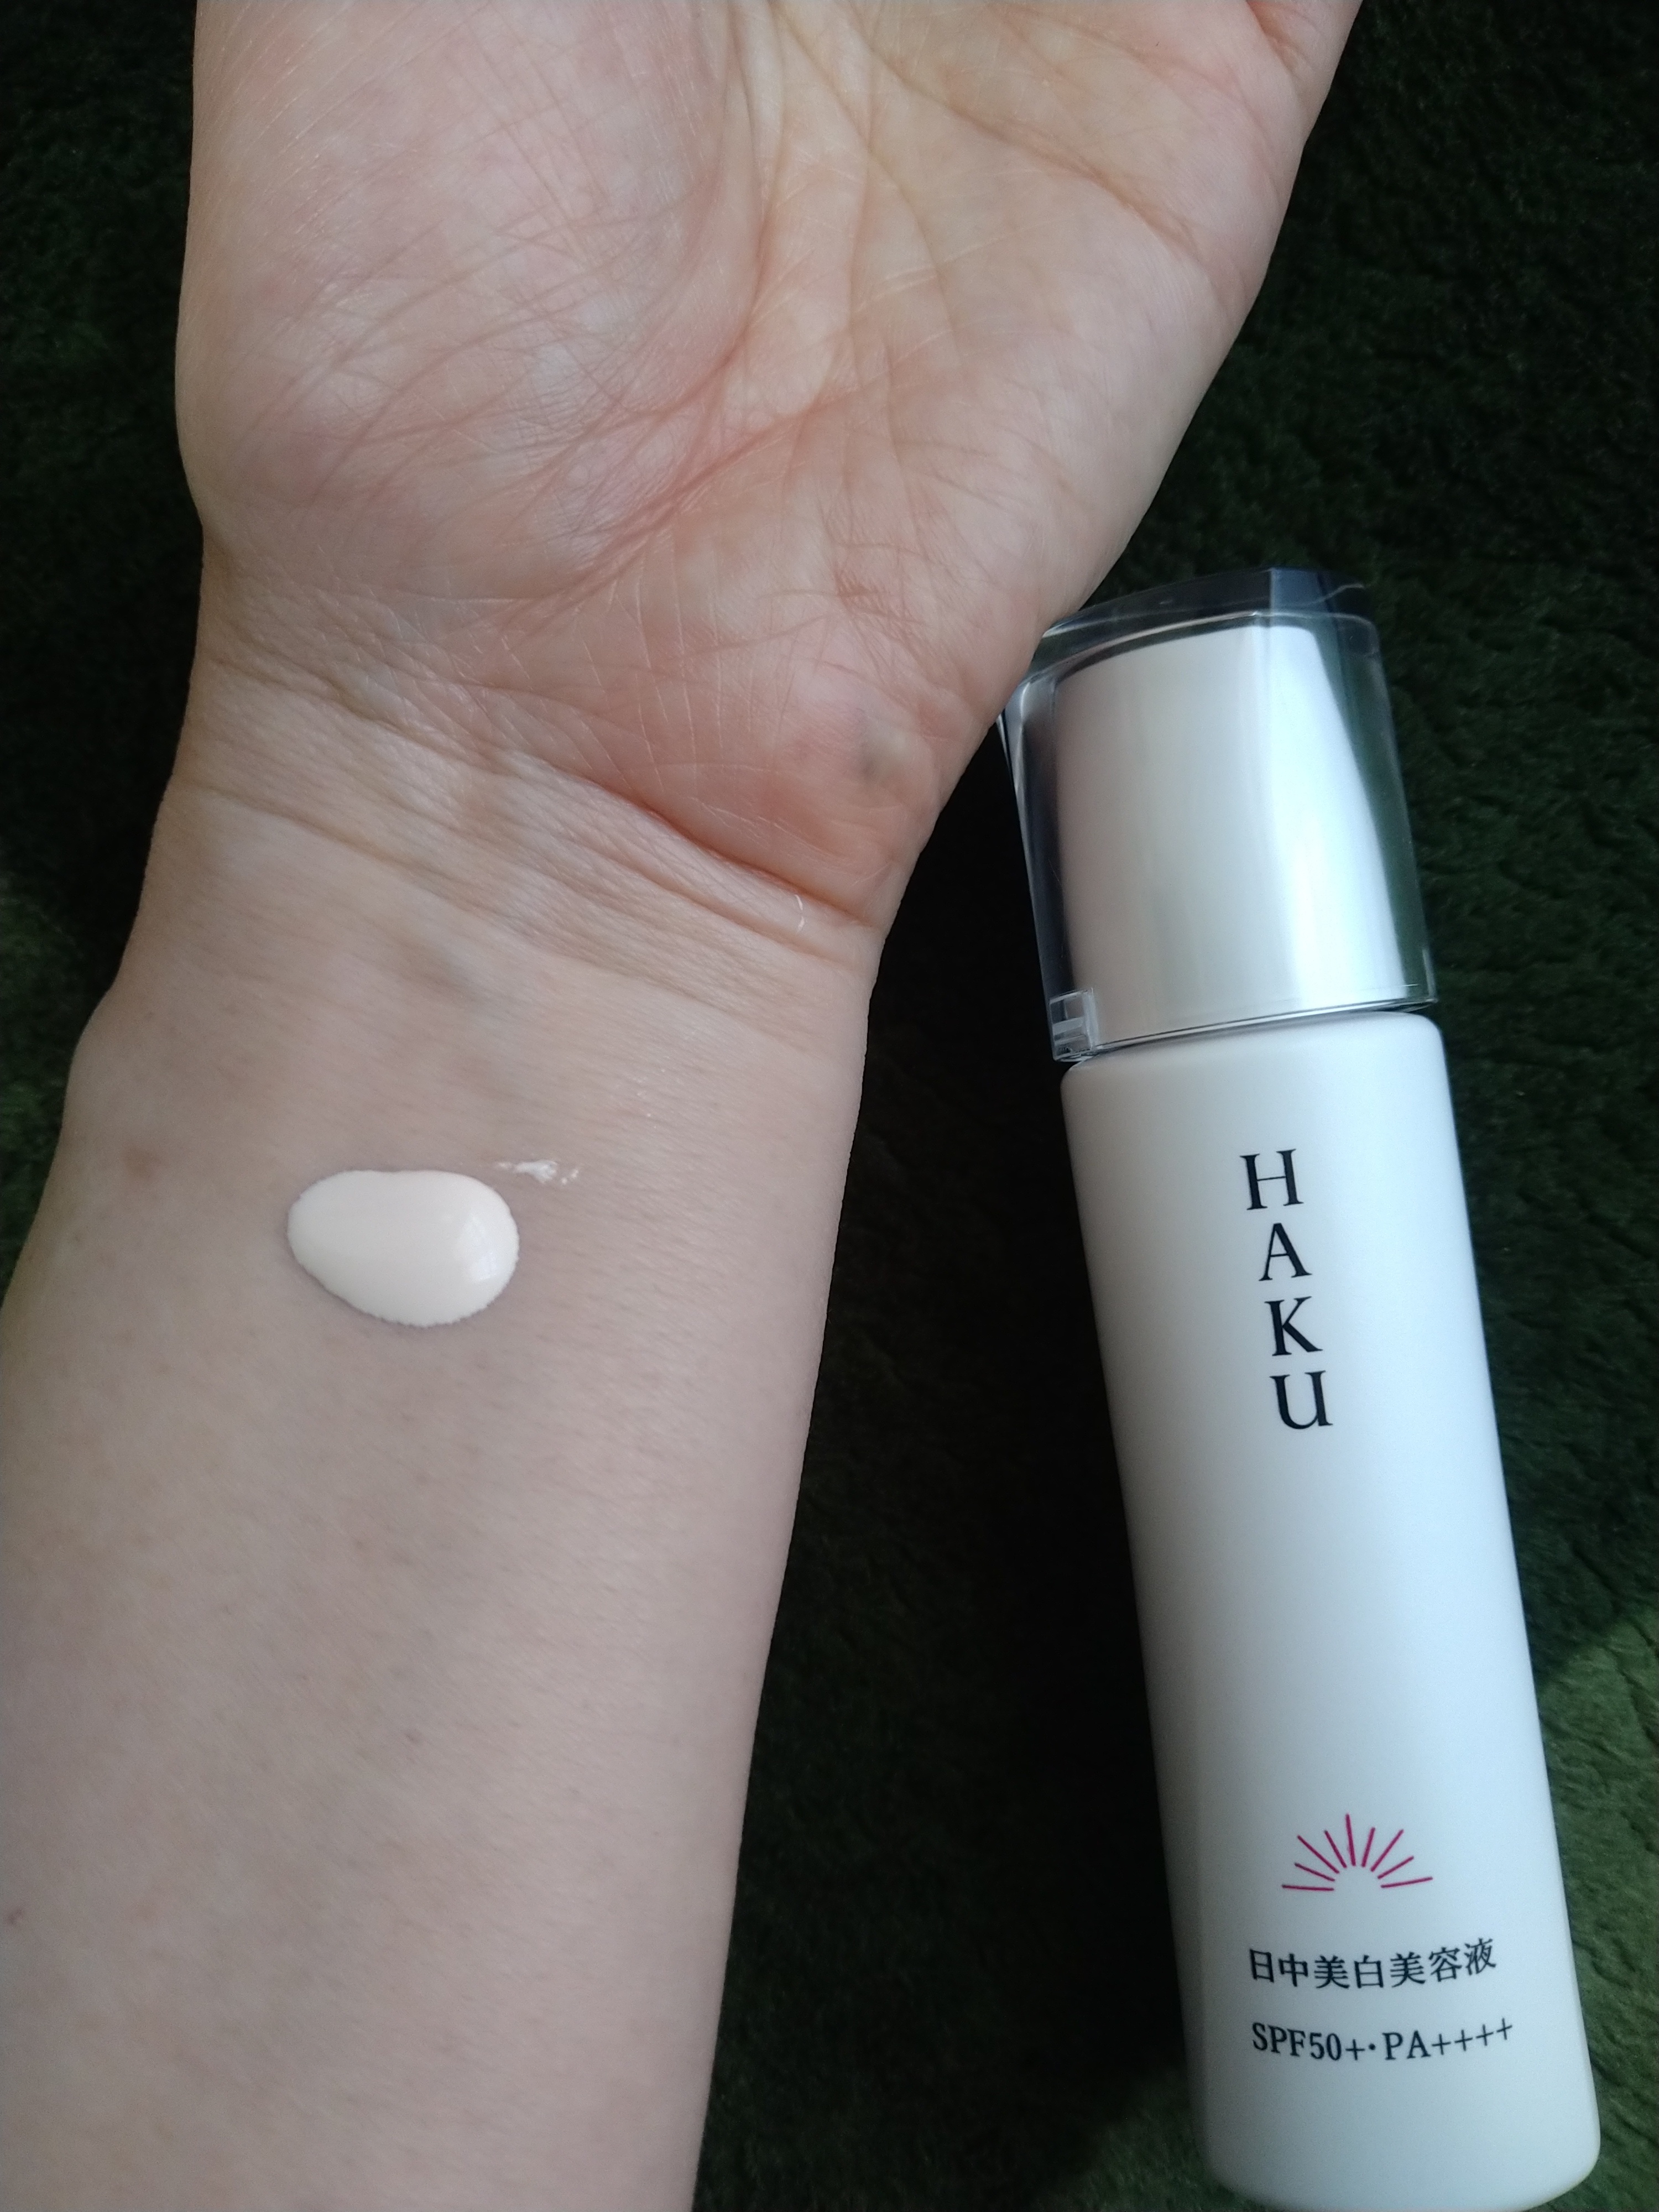 HAKU 薬用 日中美白美容液 - 基礎化粧品